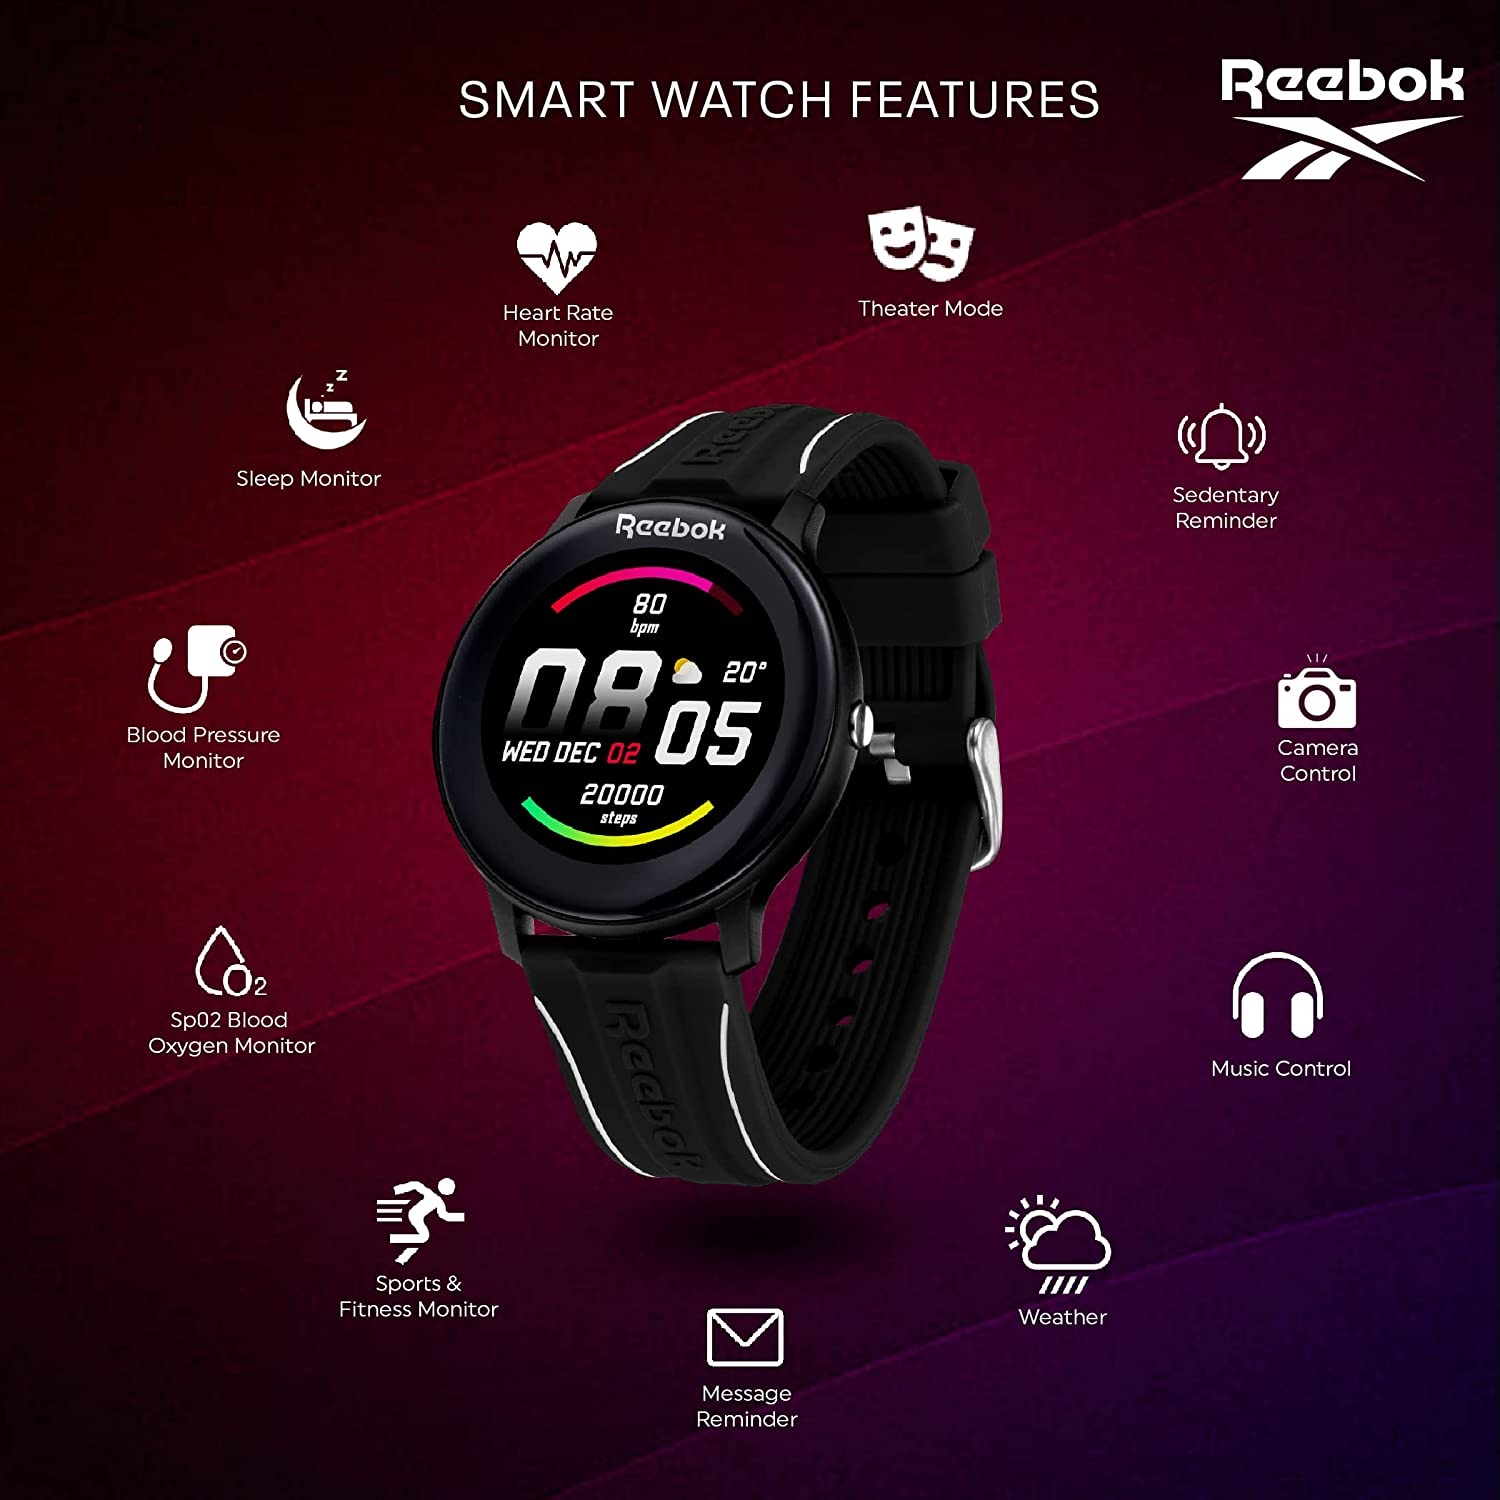 Reebok ActiveFit 1.0 smartwatch